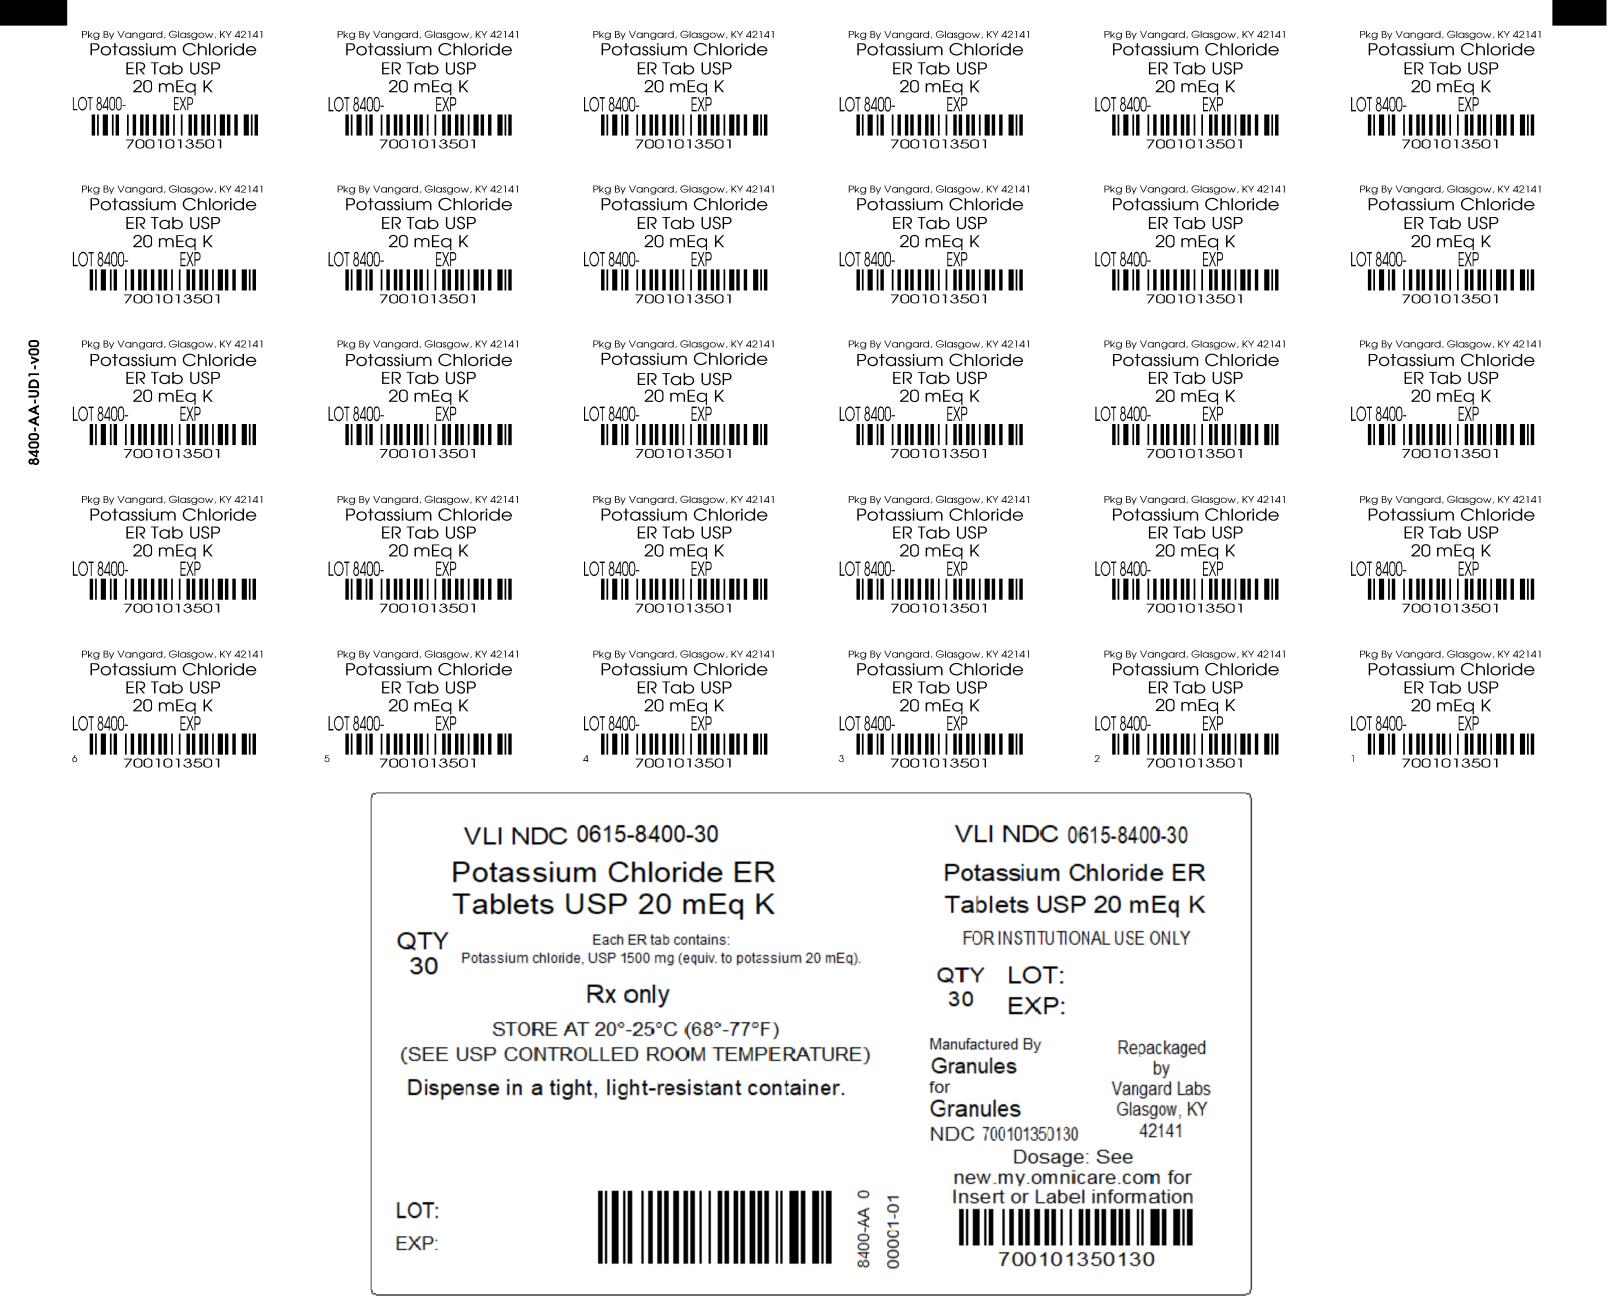 Potassium Chloride ER Tab 20 mEq unit-dose label